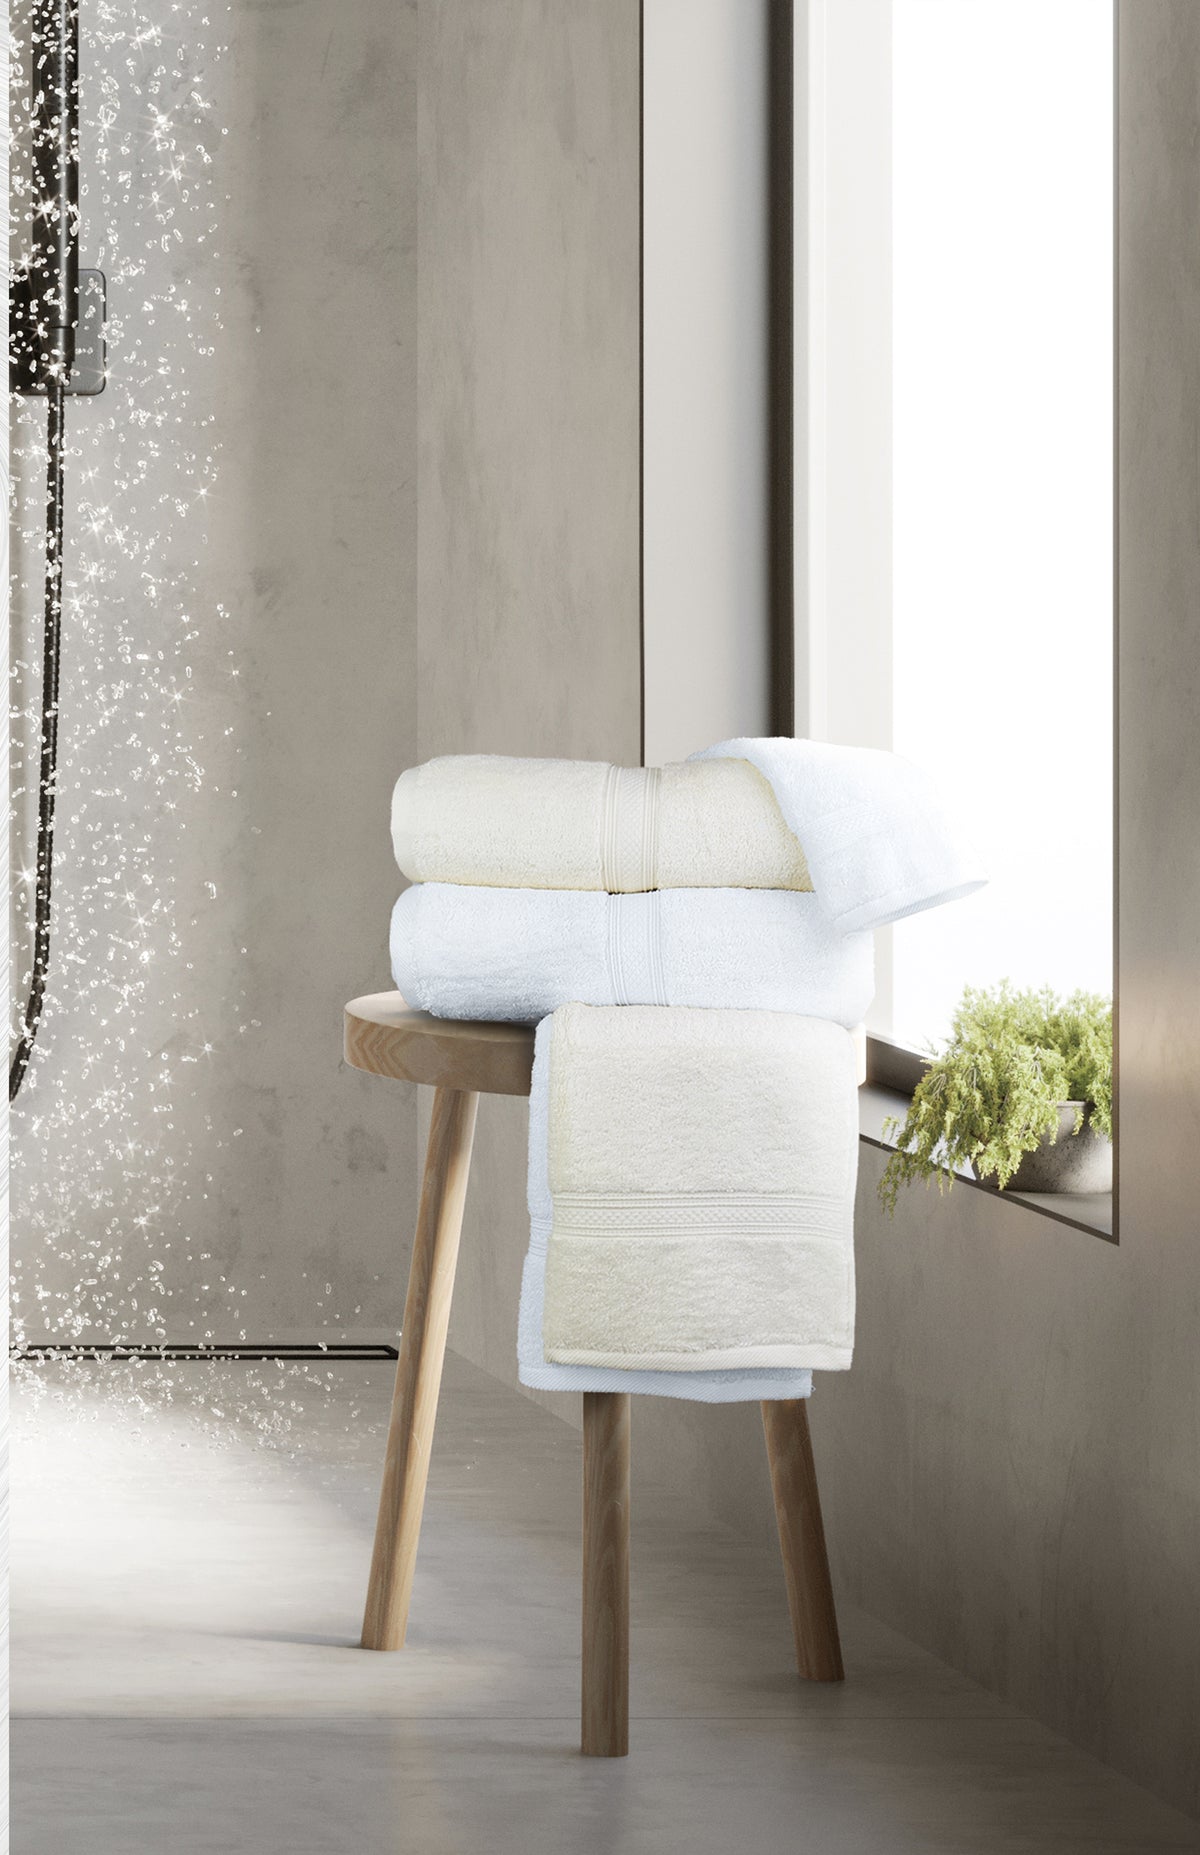 Bath Sheet - Oxford Vicenza Towel - Bulk Linen Supply